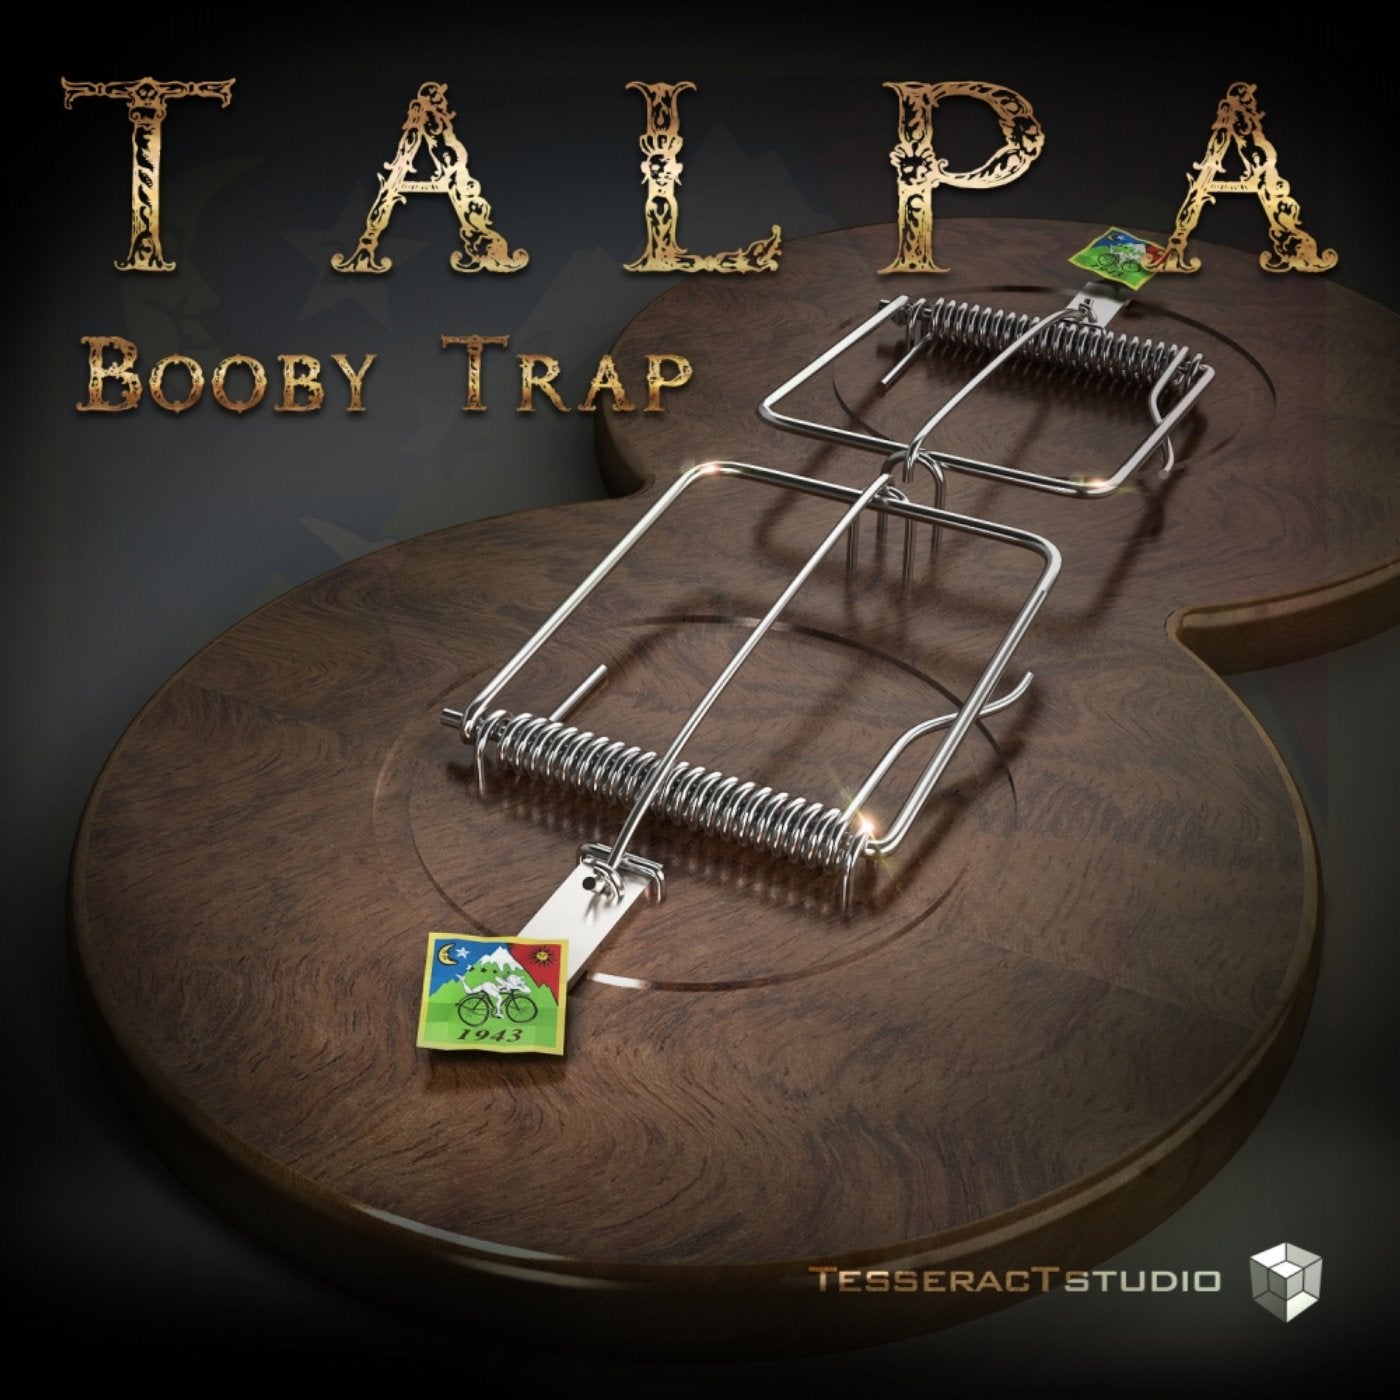 Booby trapping. Booby Trap. Bob Saget - Booby Trap. 2015 - Talpa - Booby Trap [Ep]. R6 Booby Trap.